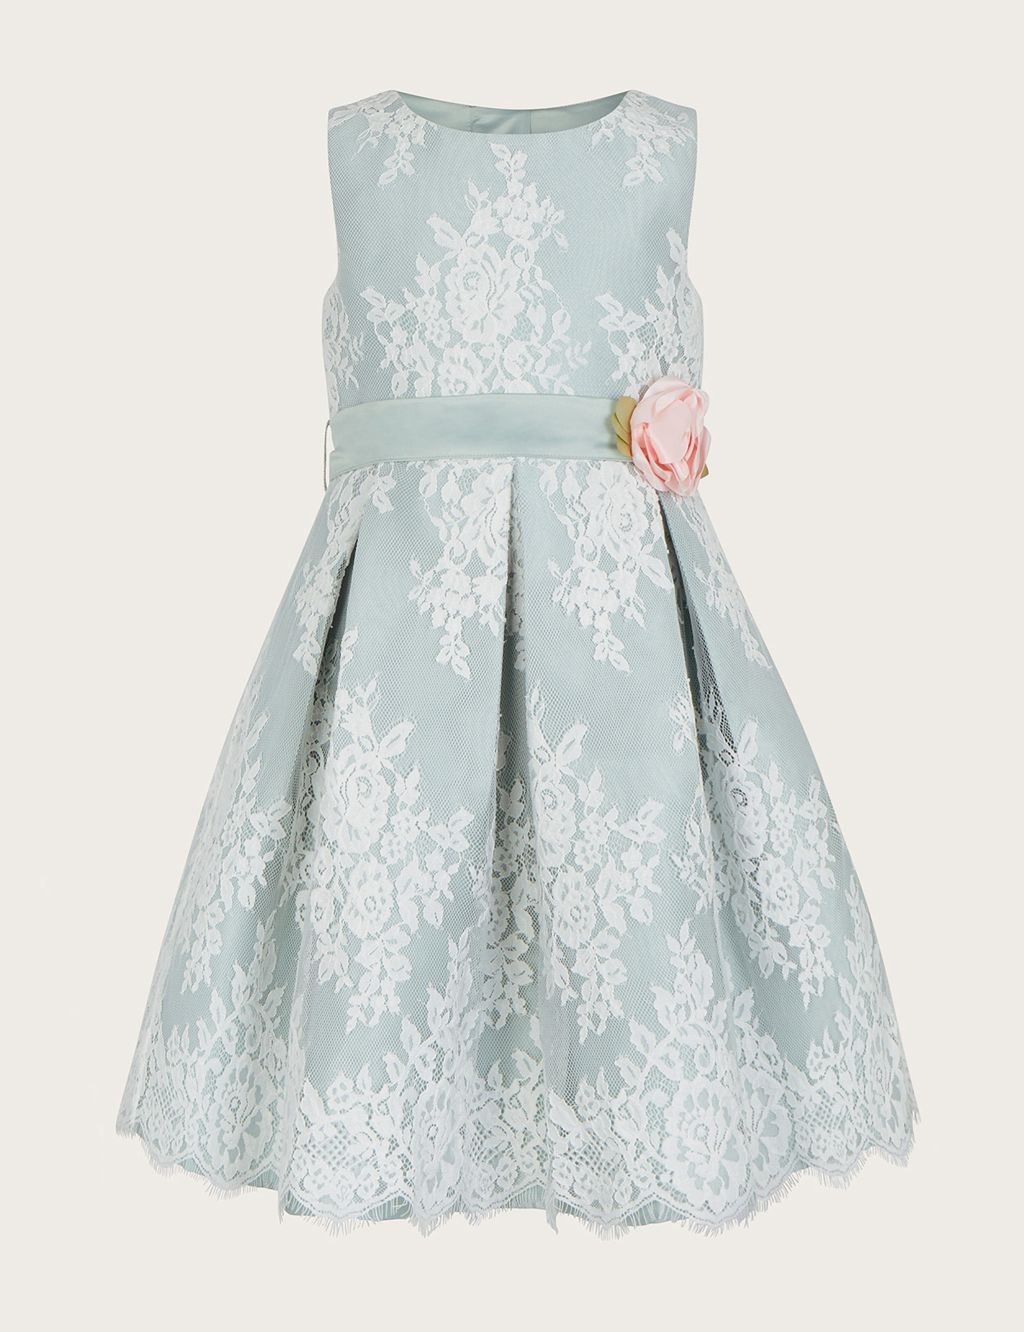 Lace Occasion Dress (3-15 Yrs) image 1